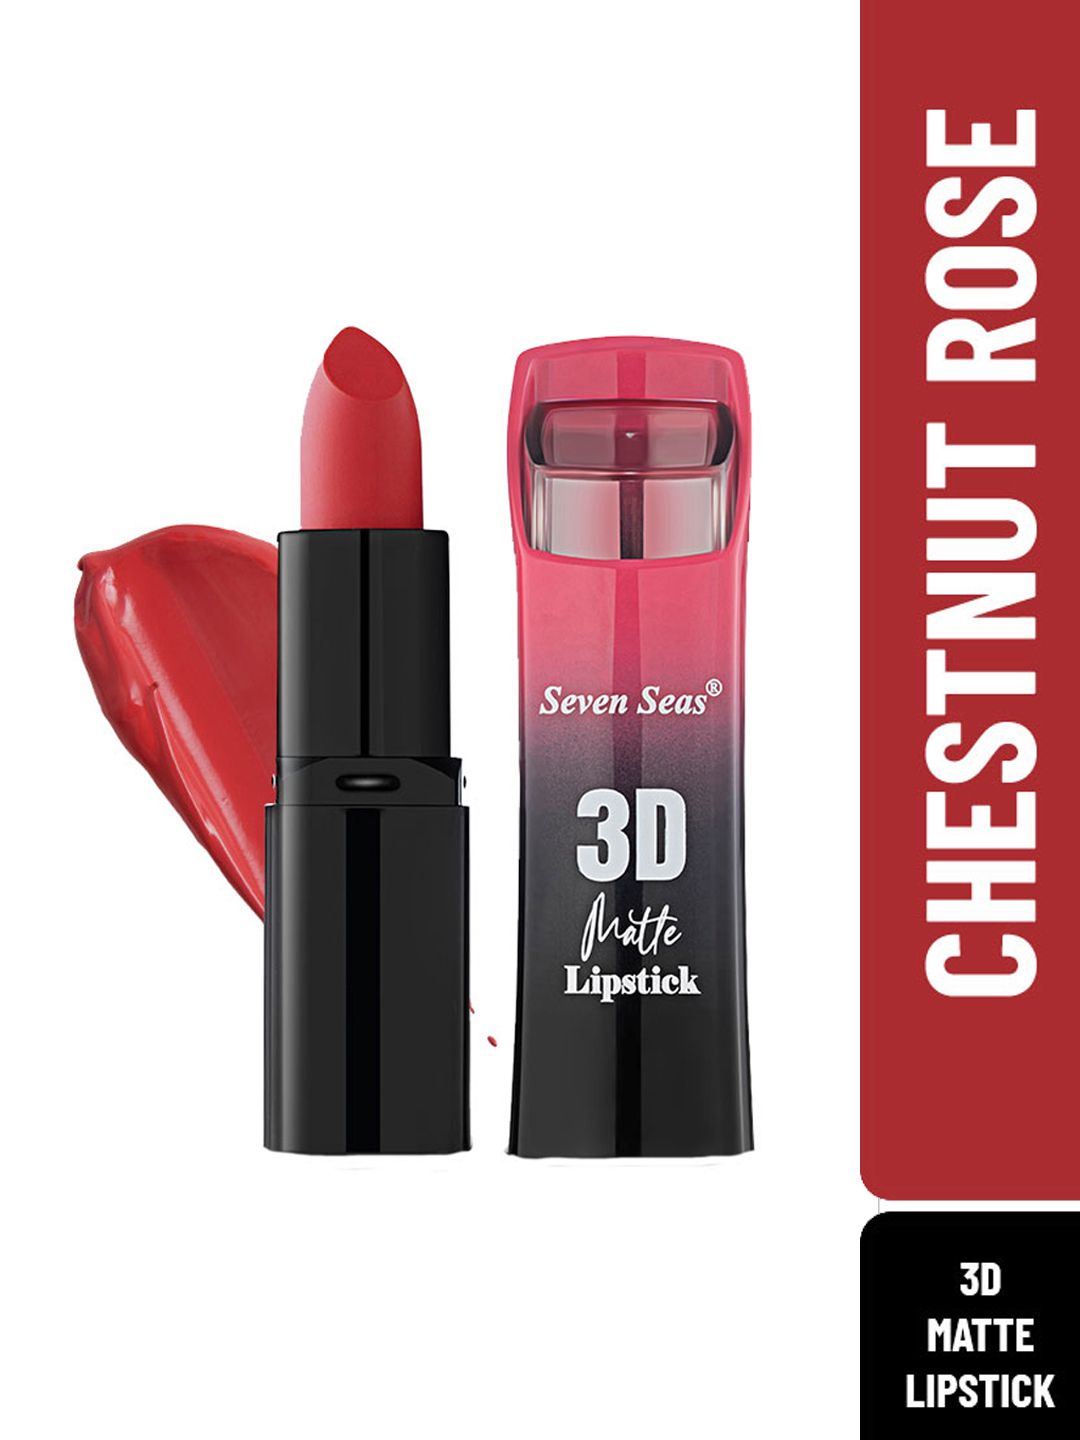 Seven Seas Pink 3D Matte Full Coverage Lipstick Chestnut Rose Price in India